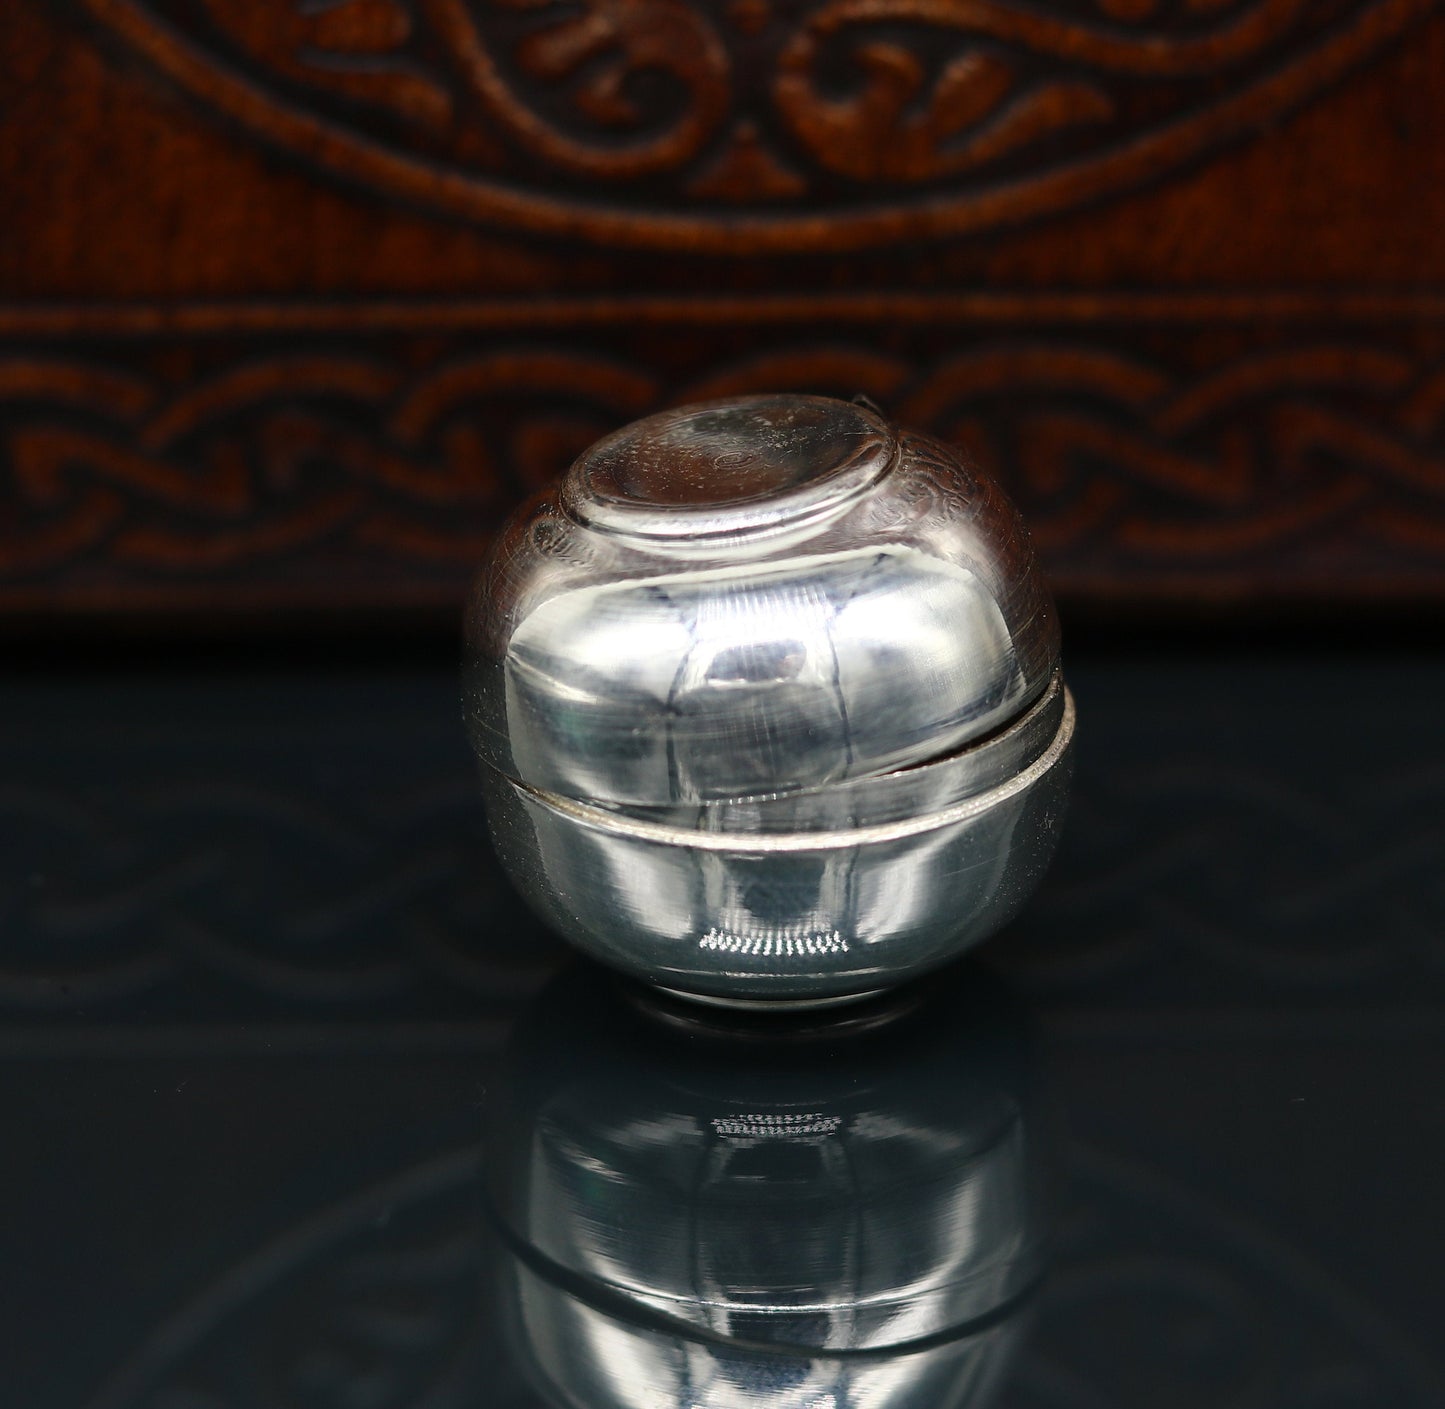 999 fine silver handmade gorgeous small idol's Prasad box, trinket box, container box, brides sindur box, solid silver article utensil sv183 - TRIBAL ORNAMENTS